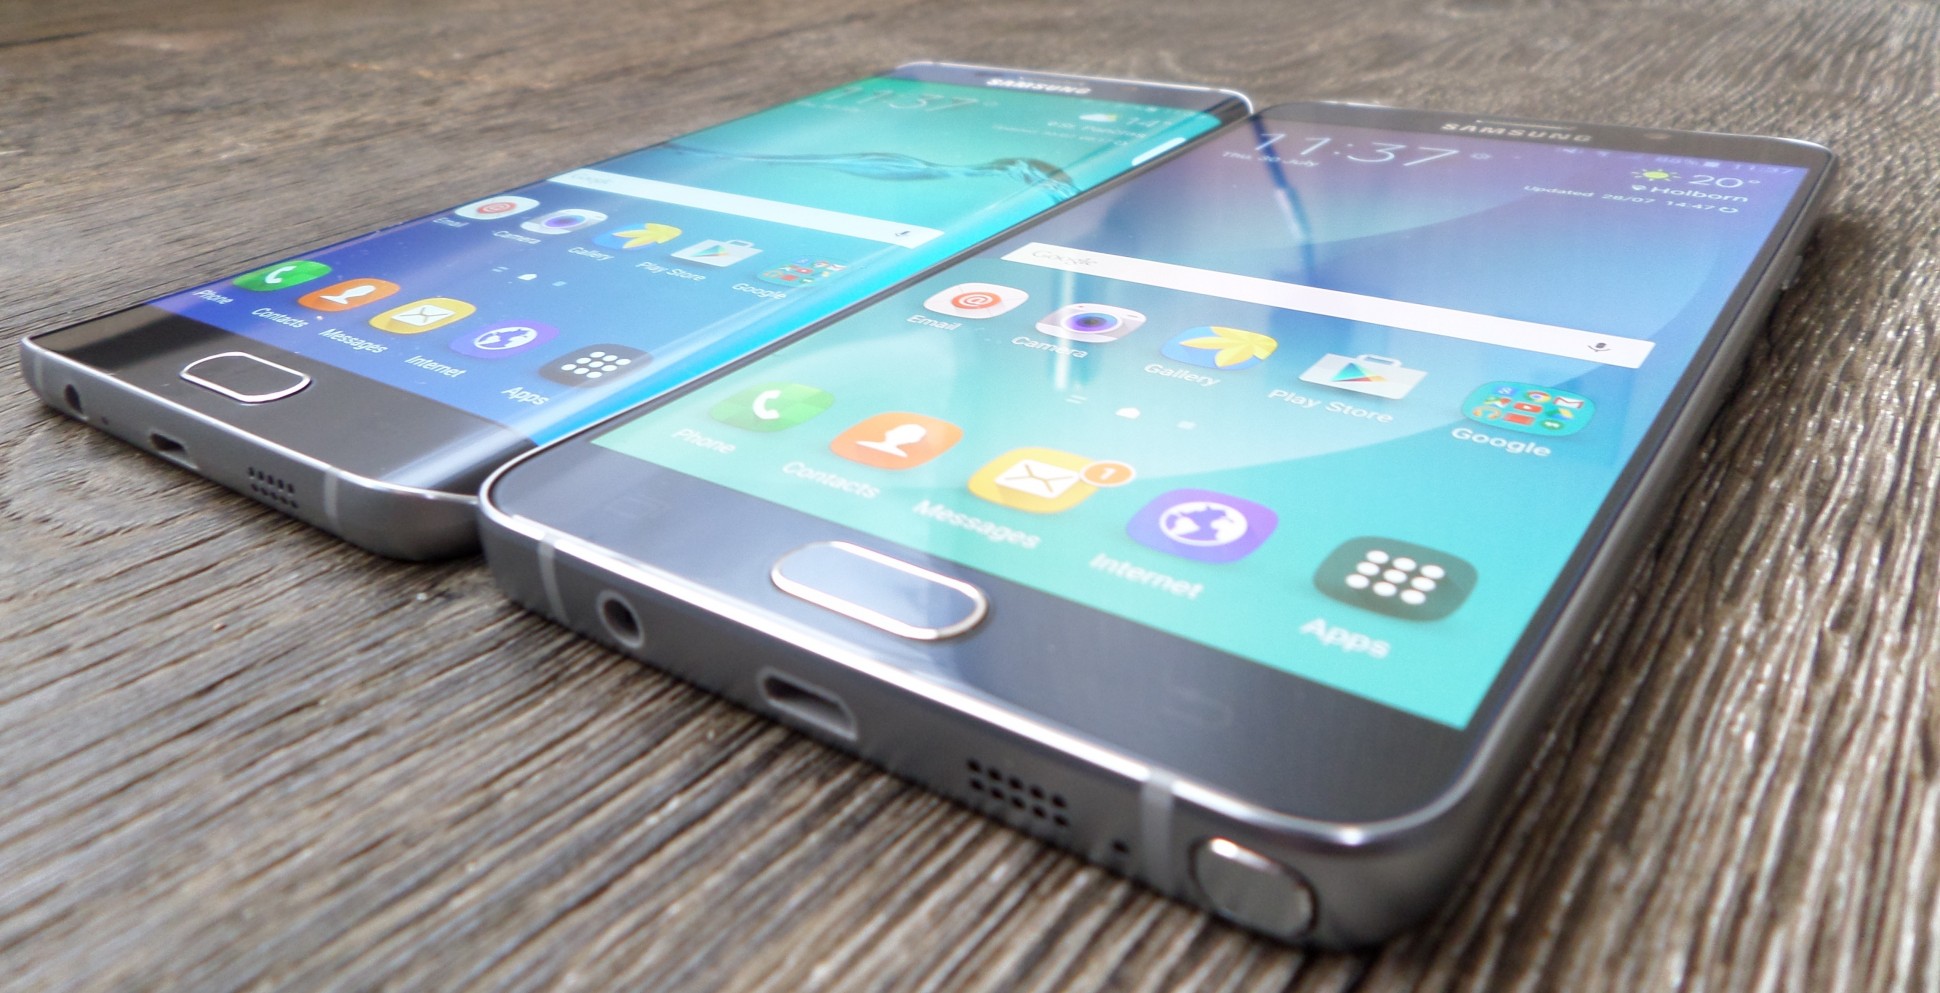  Samsung Galaxy Note 5